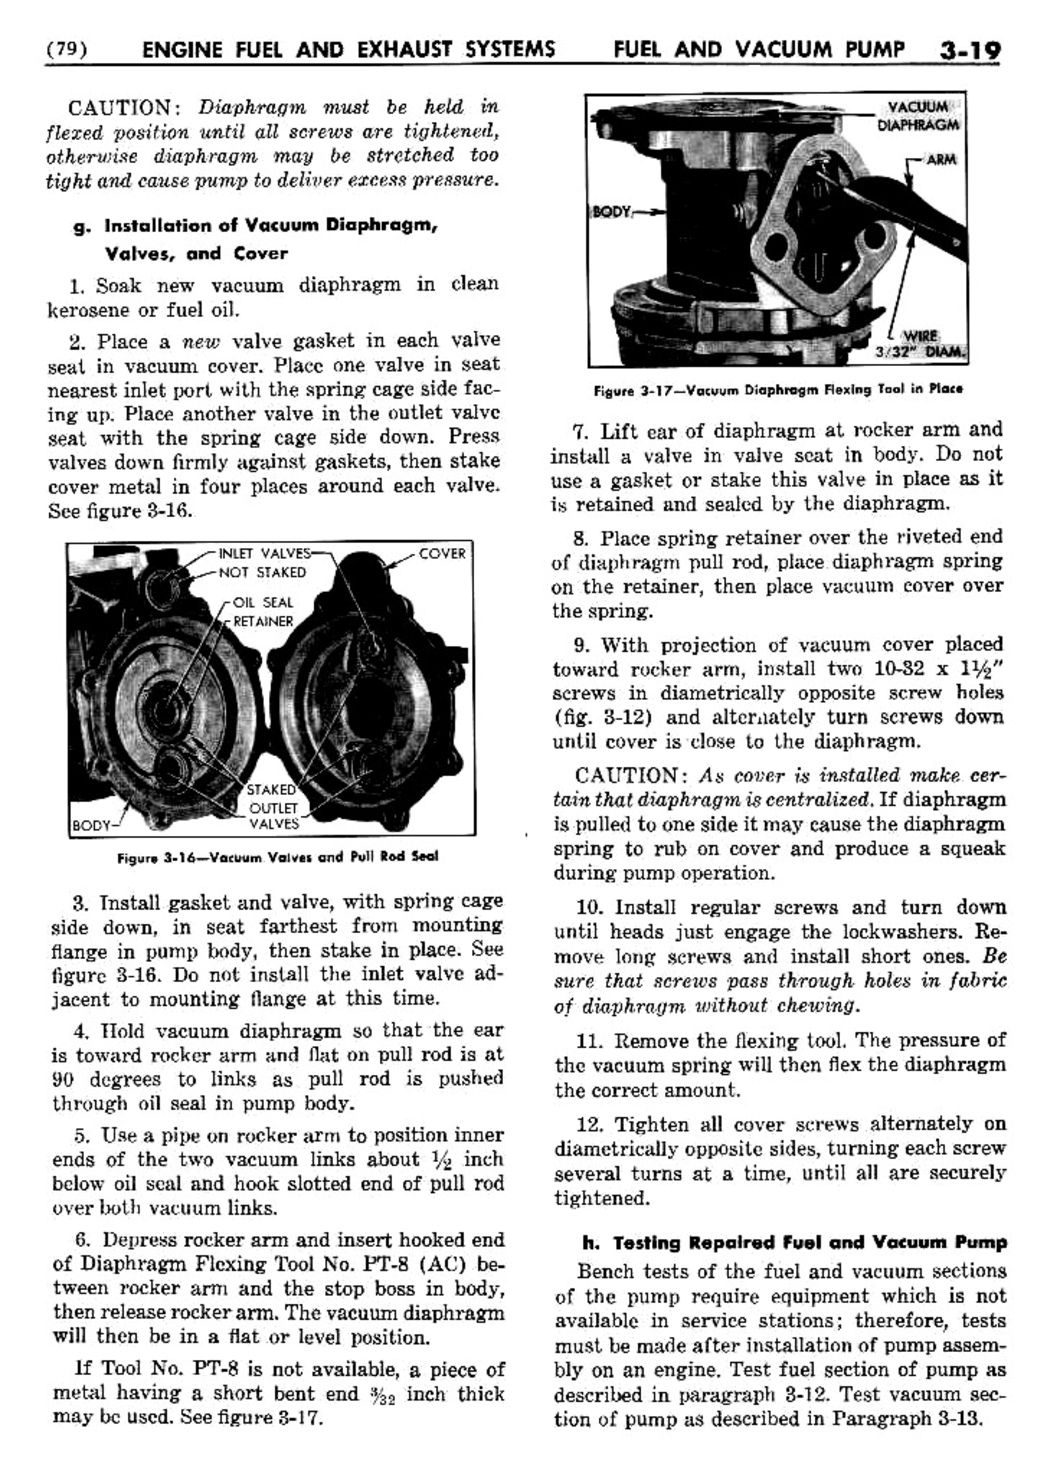 n_04 1954 Buick Shop Manual - Engine Fuel & Exhaust-019-019.jpg